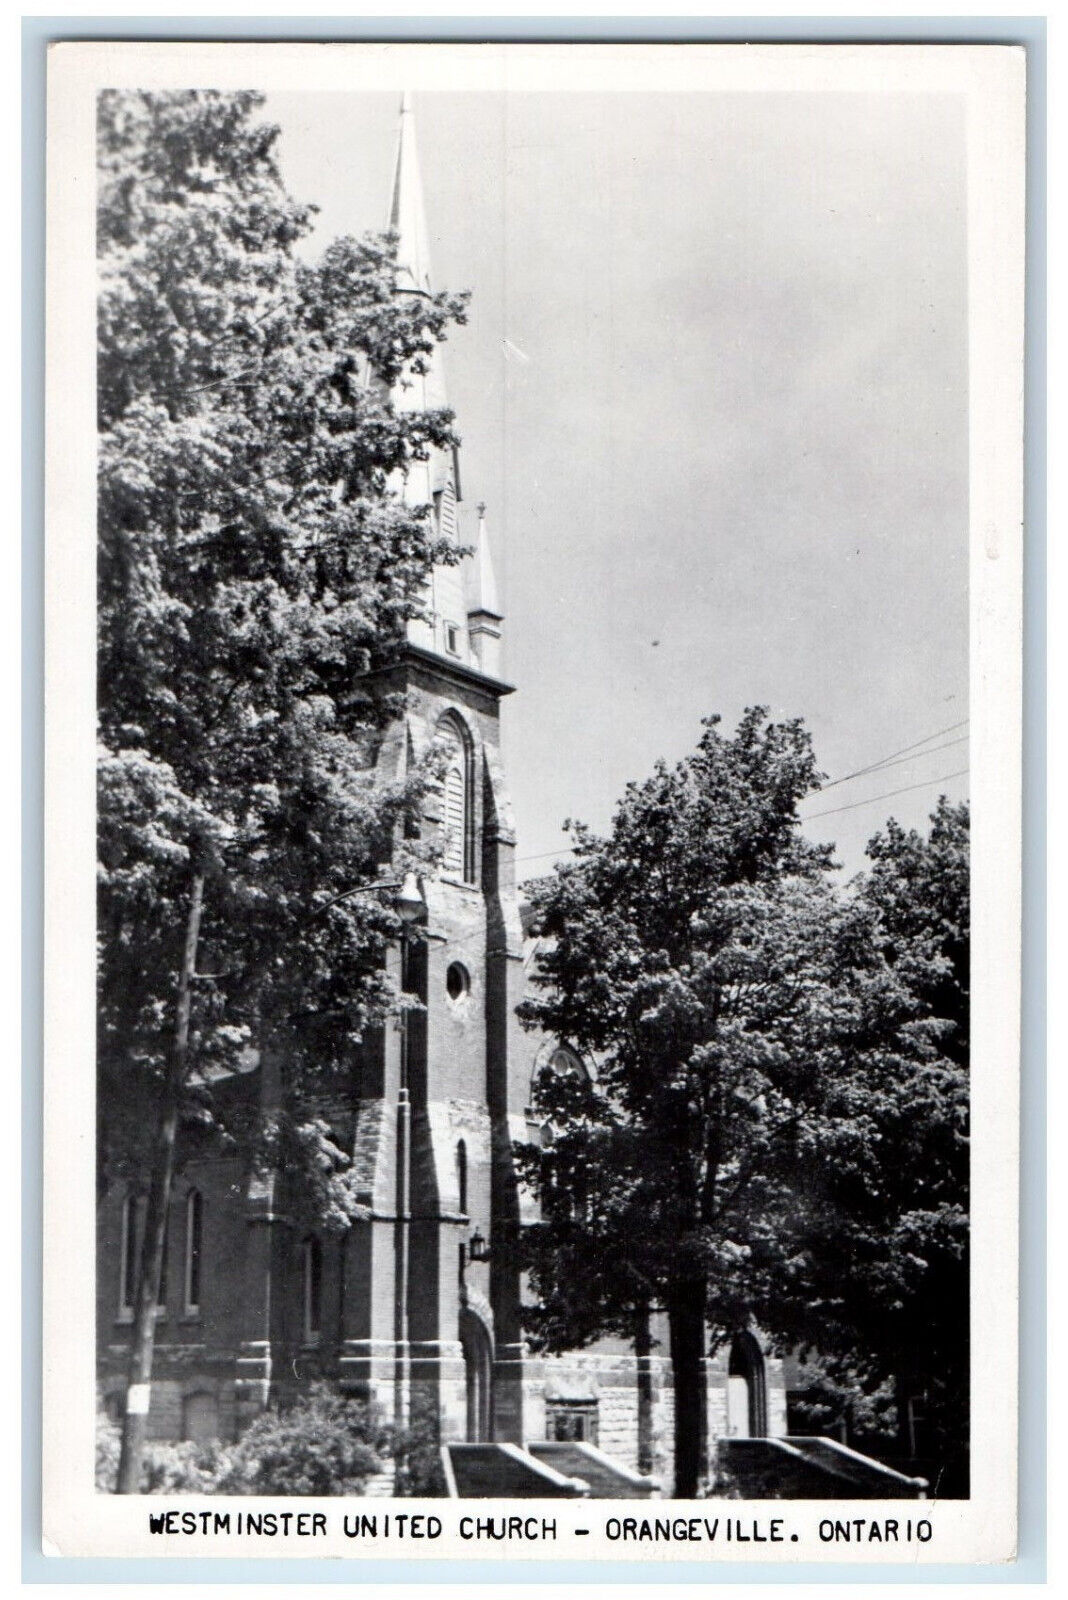 1959 Westminster United Church Orangeville Ontario Canada Vintage Postcard